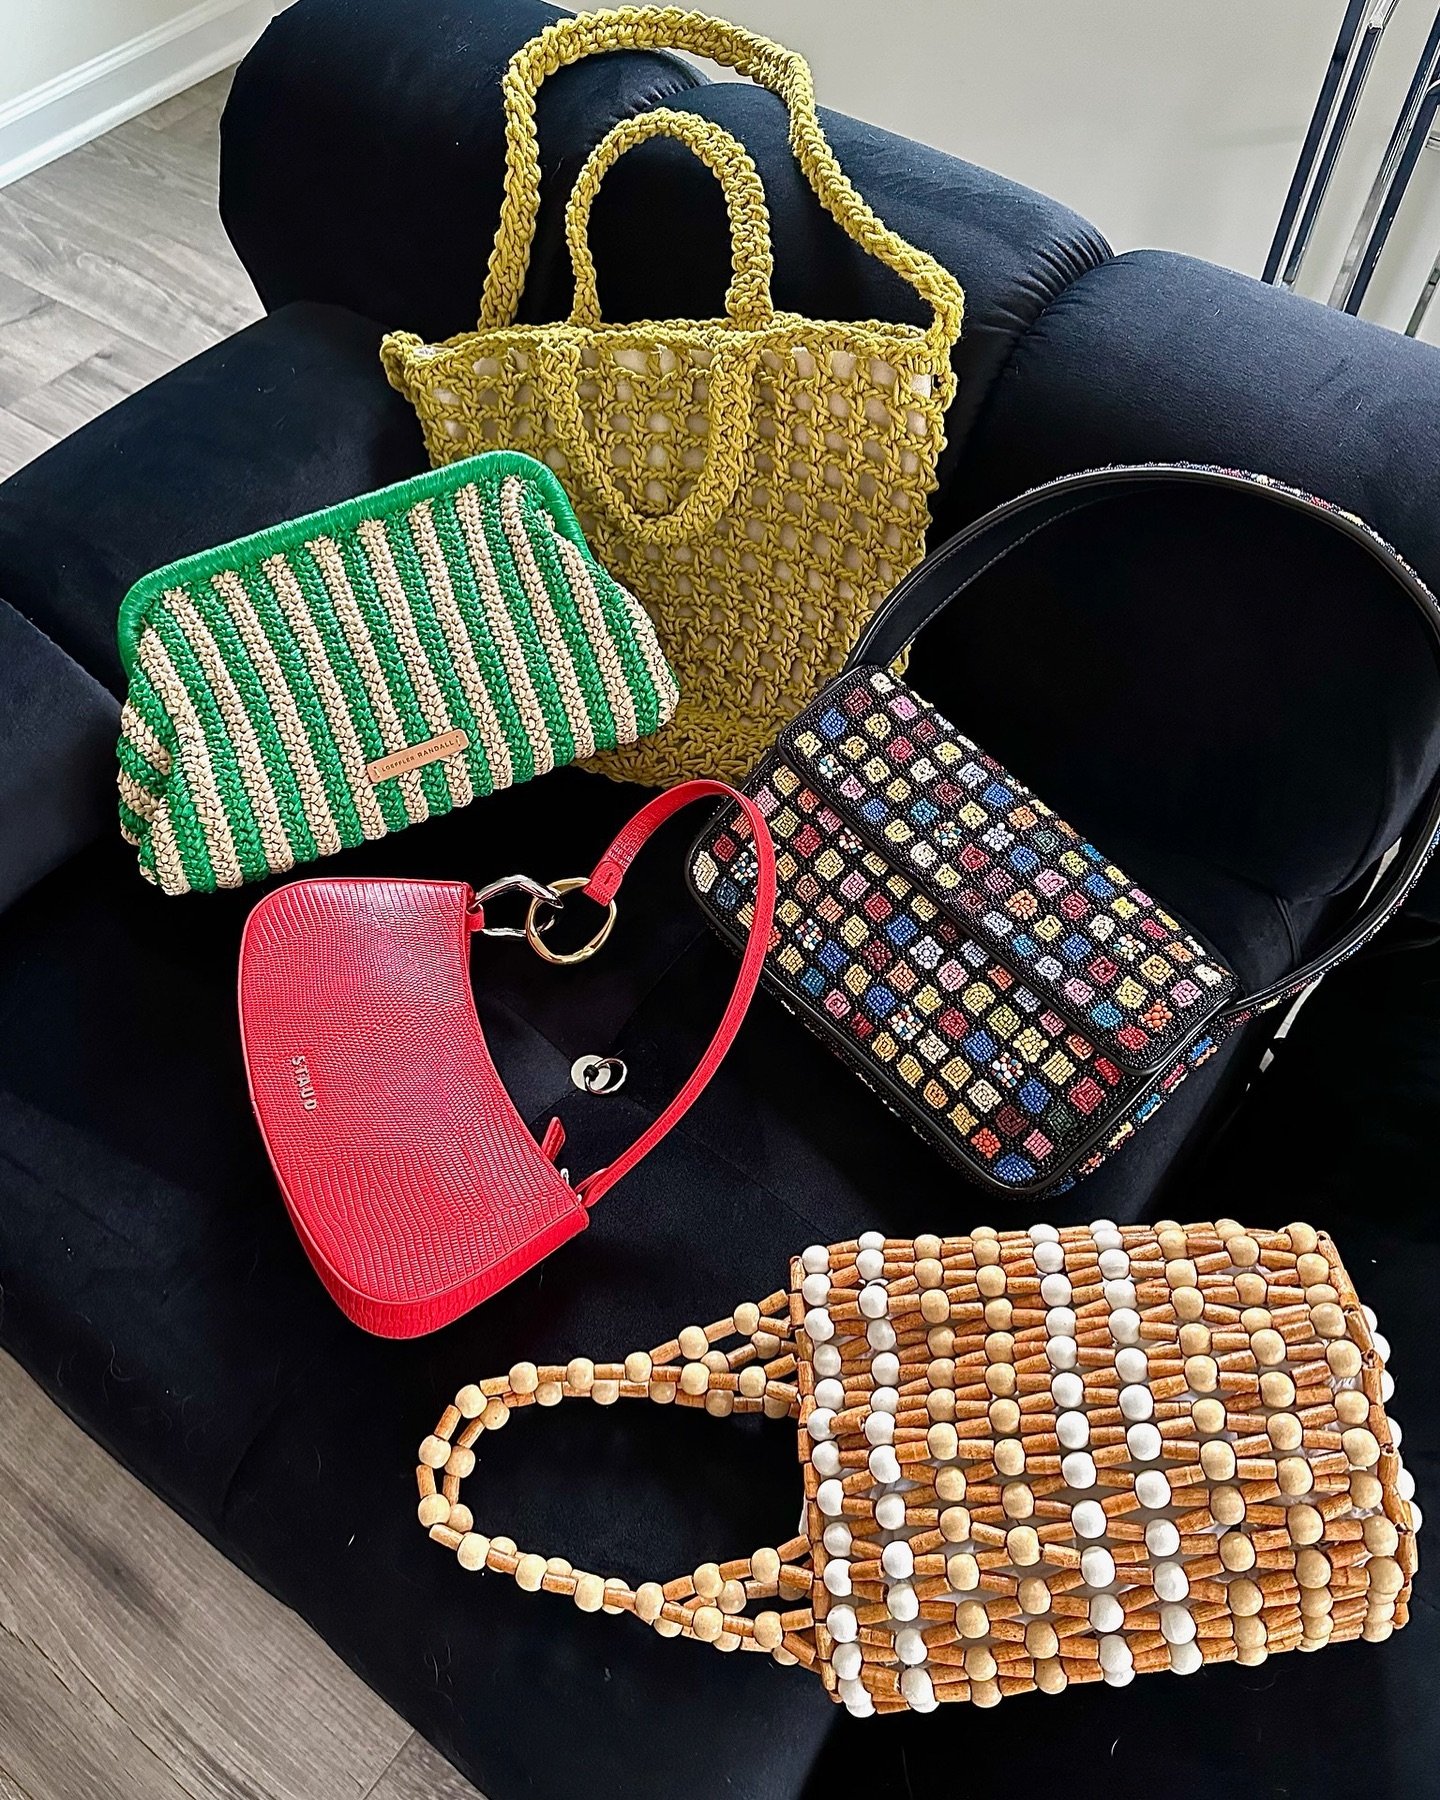 Growing my summer handbag collection 👏

#wardrobestylist #fashionstyle #handbaglover #raleighnc #ncstylist #fashionblogger #nccreative